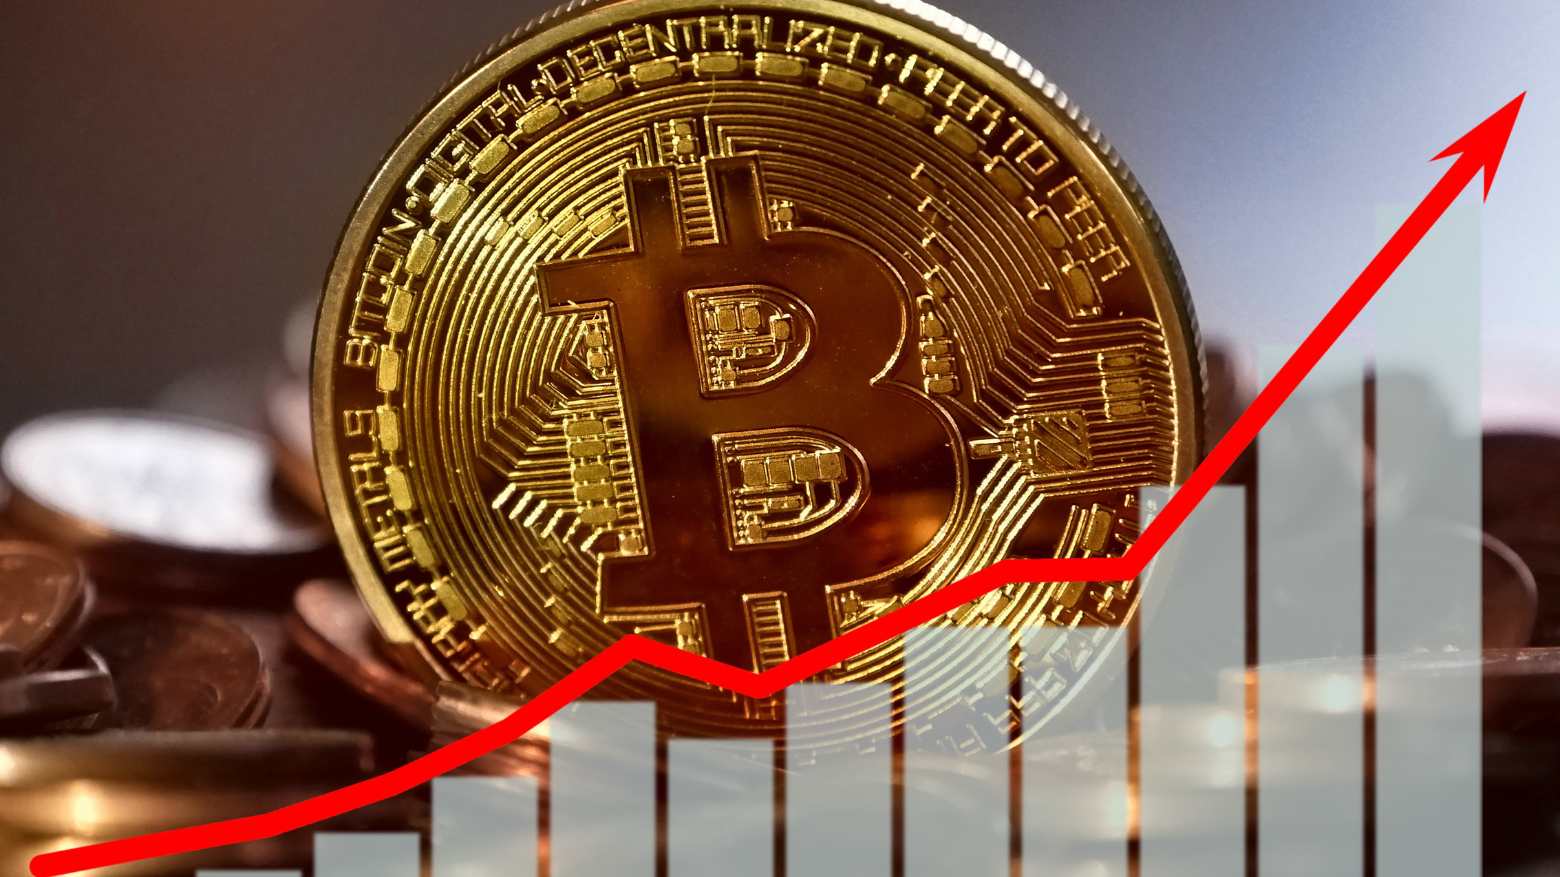 Tendência de alta do Bitcoin (BTC) permanece ‘intacta’, aponta estudo